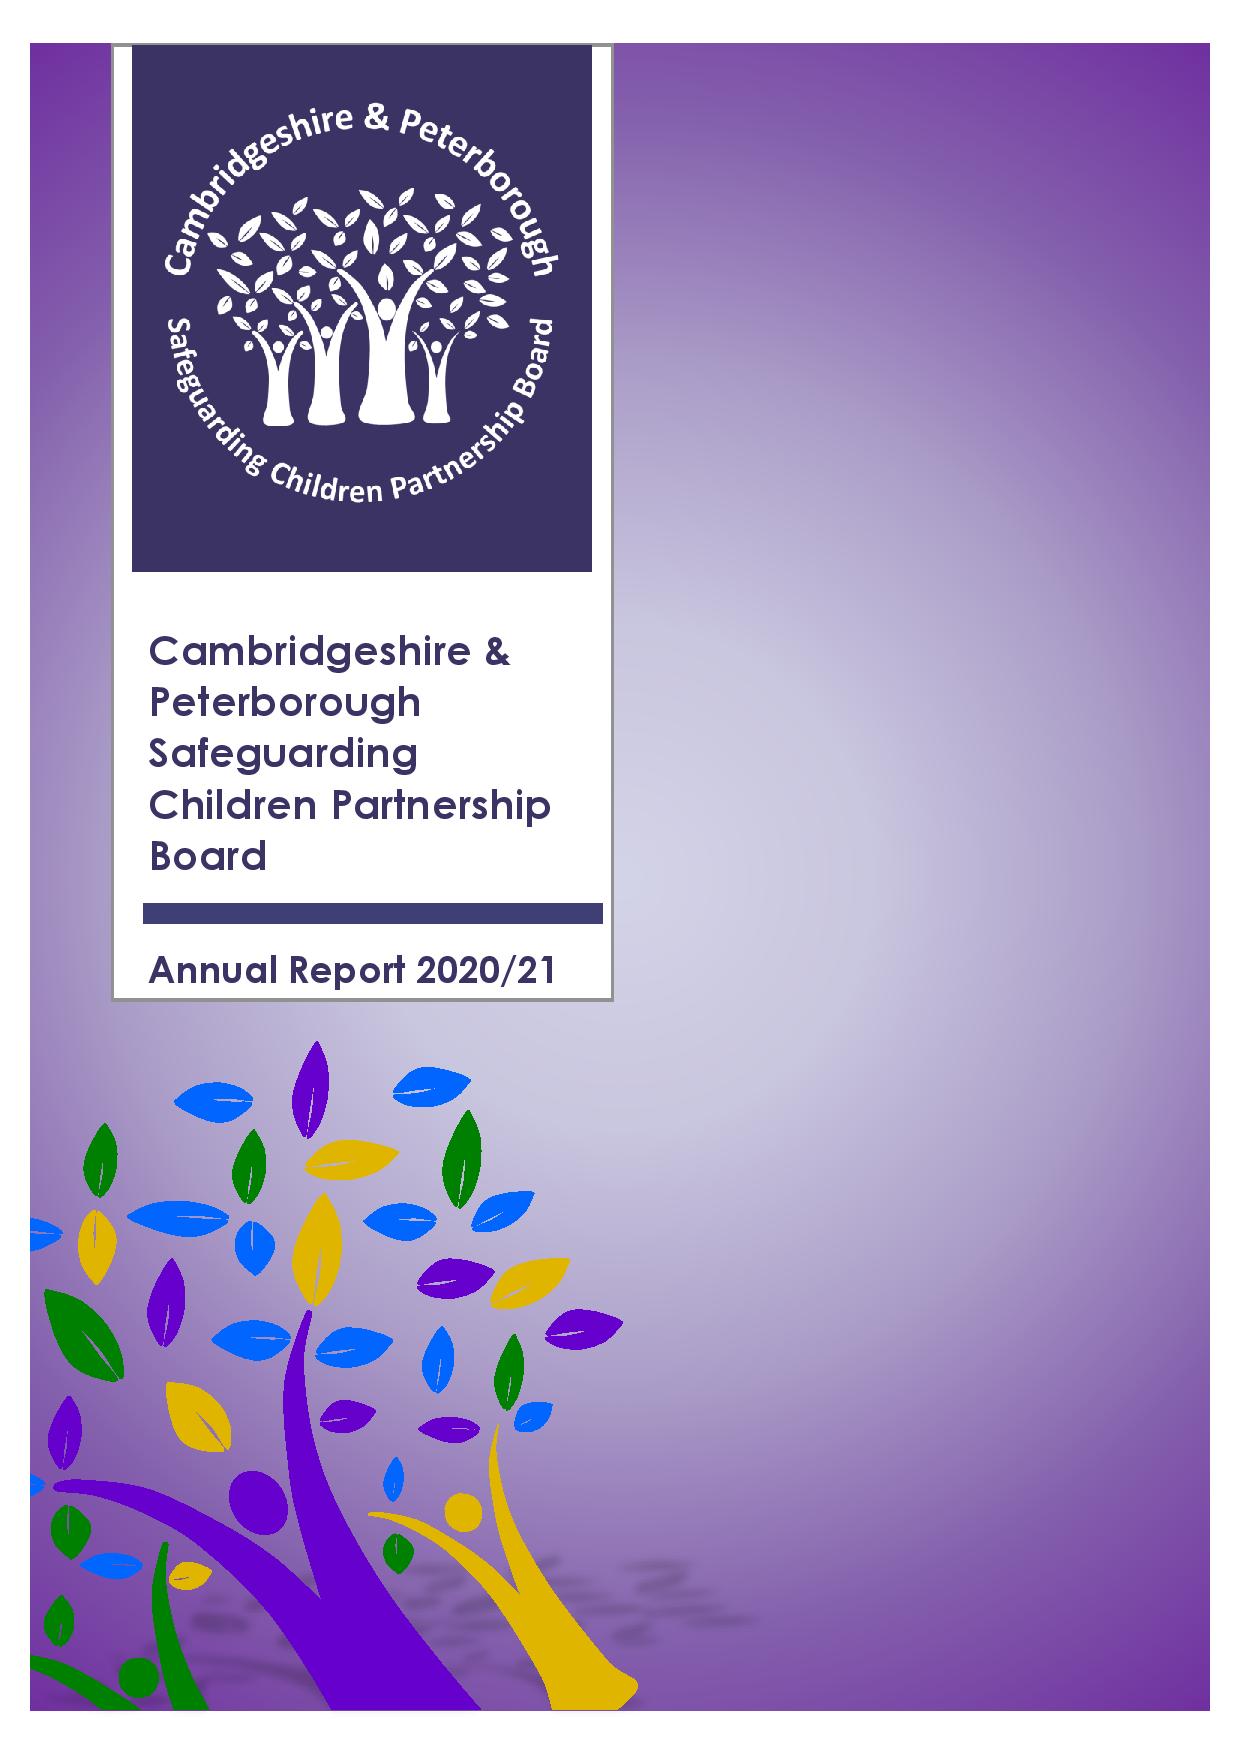 Safeguarding Children Partnership Board Annual Report 2020/2021